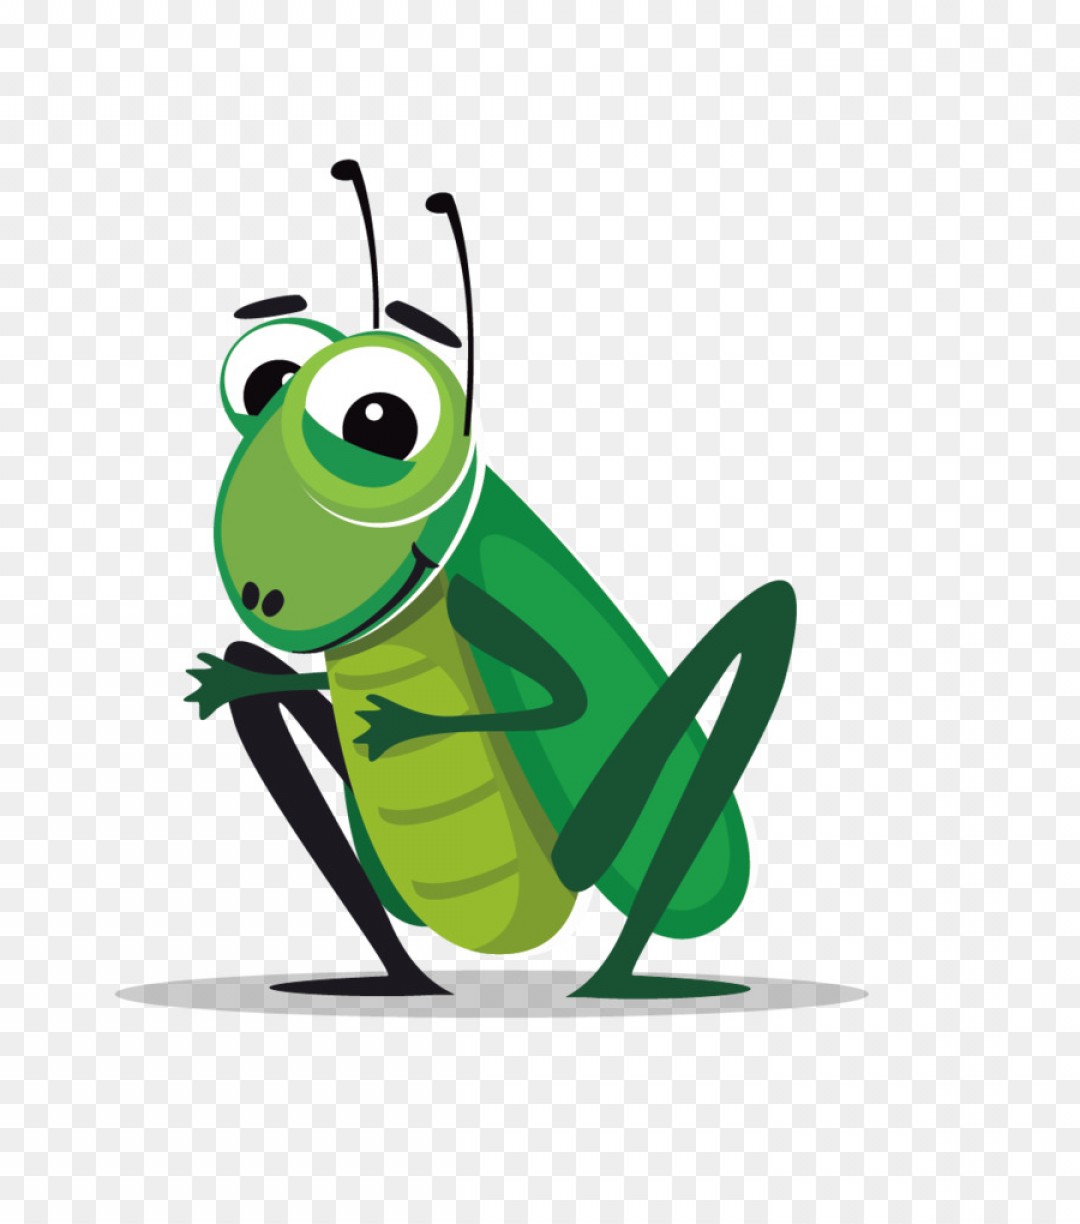 Png Insect Cricket Cartoon Clip Art Vector Material Gr.